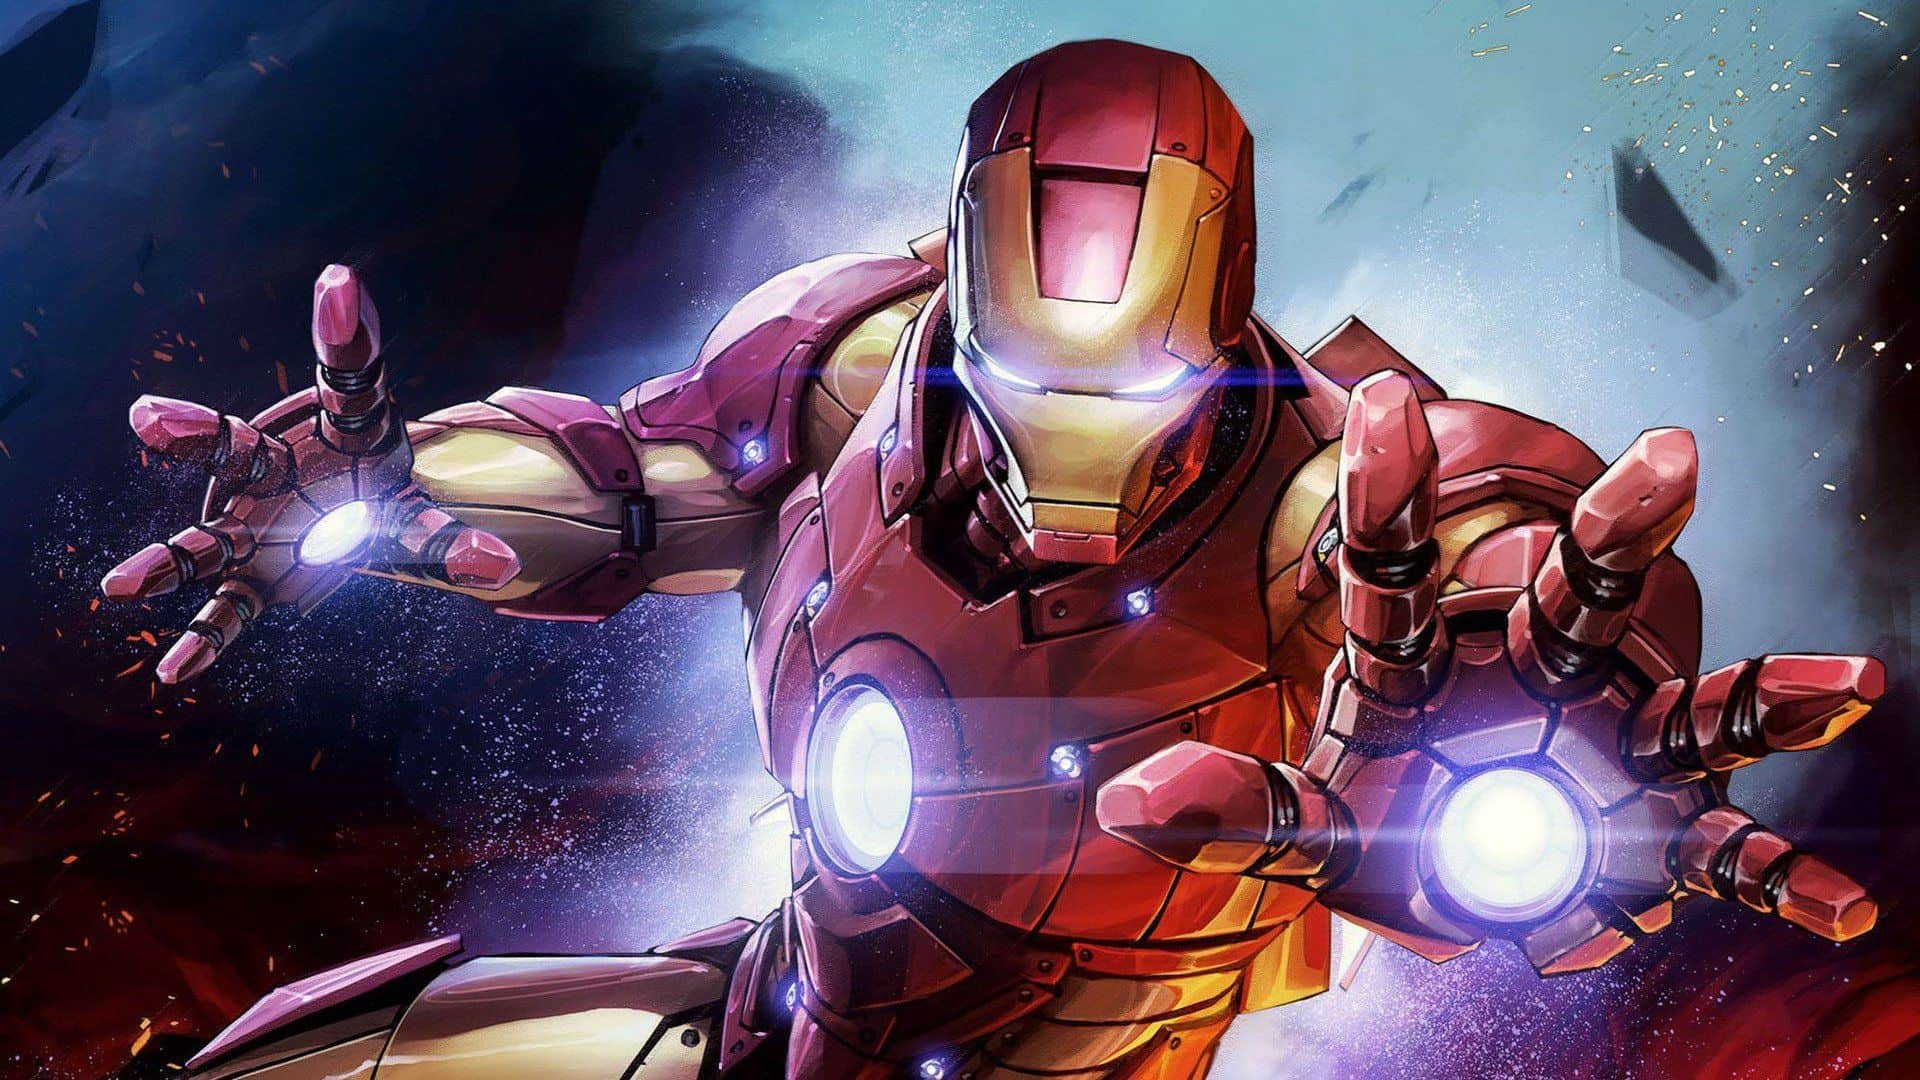 Tony Stark in the Iron Man suit